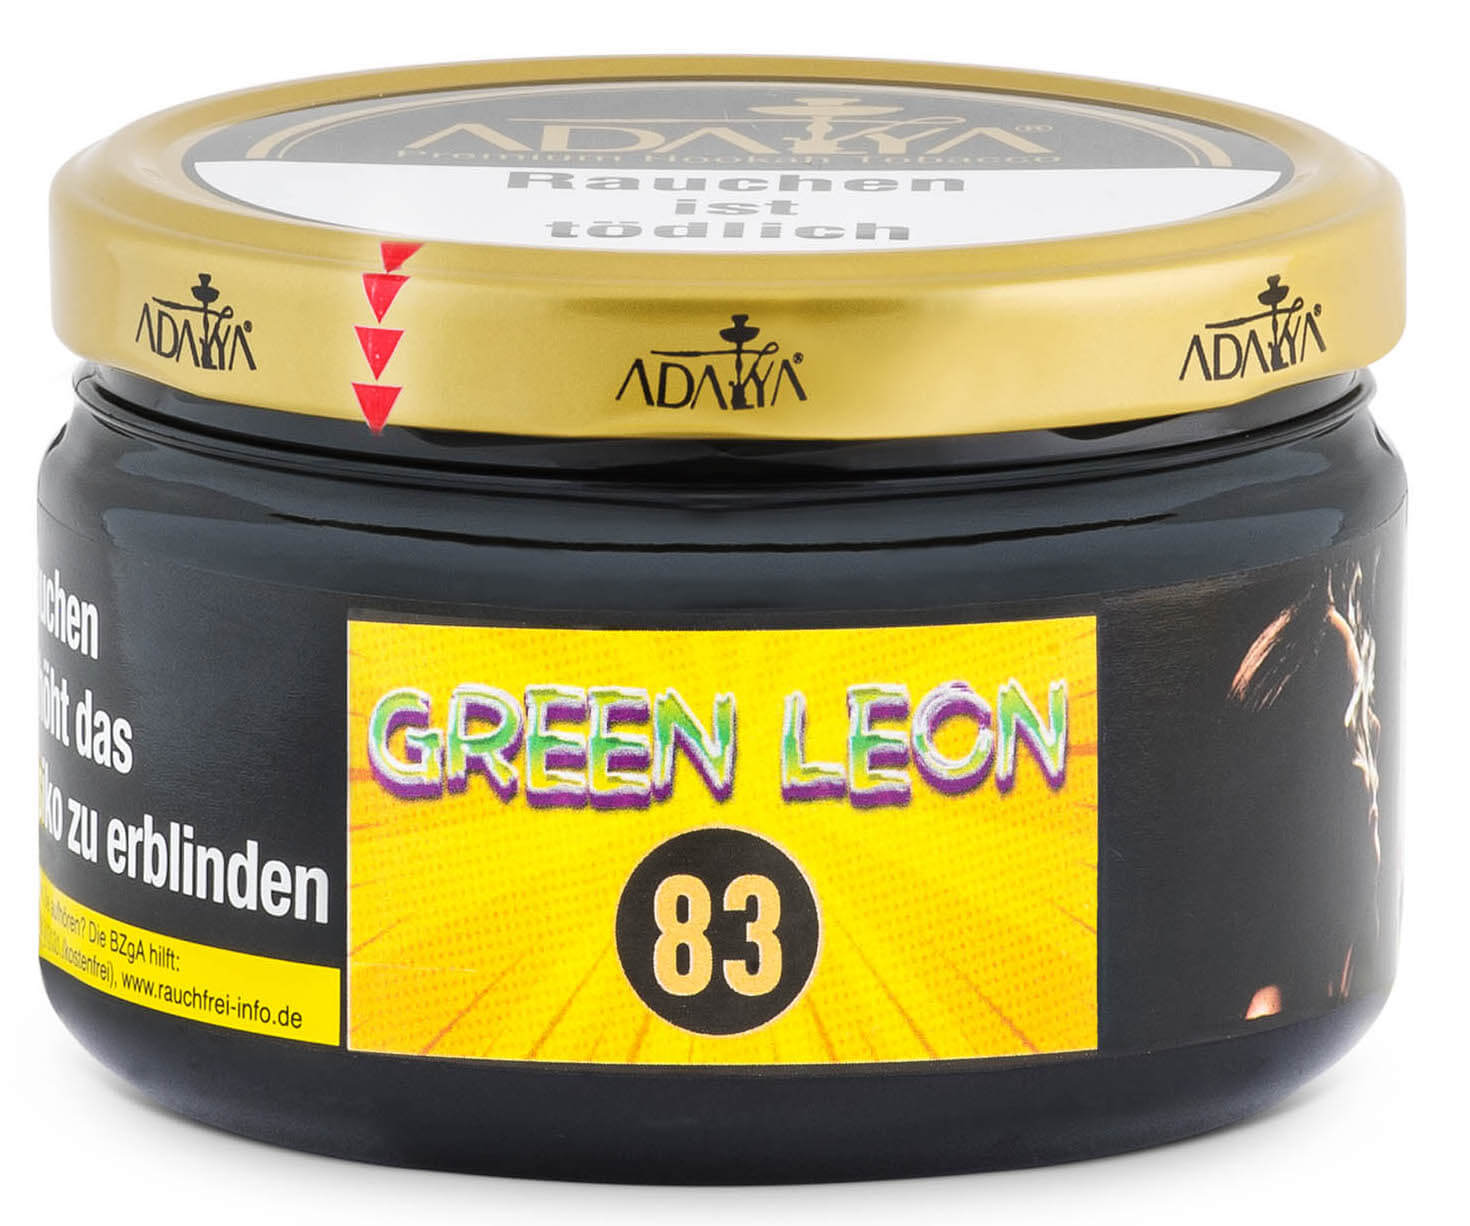 Adalya Tabak Green Leon #83 200g